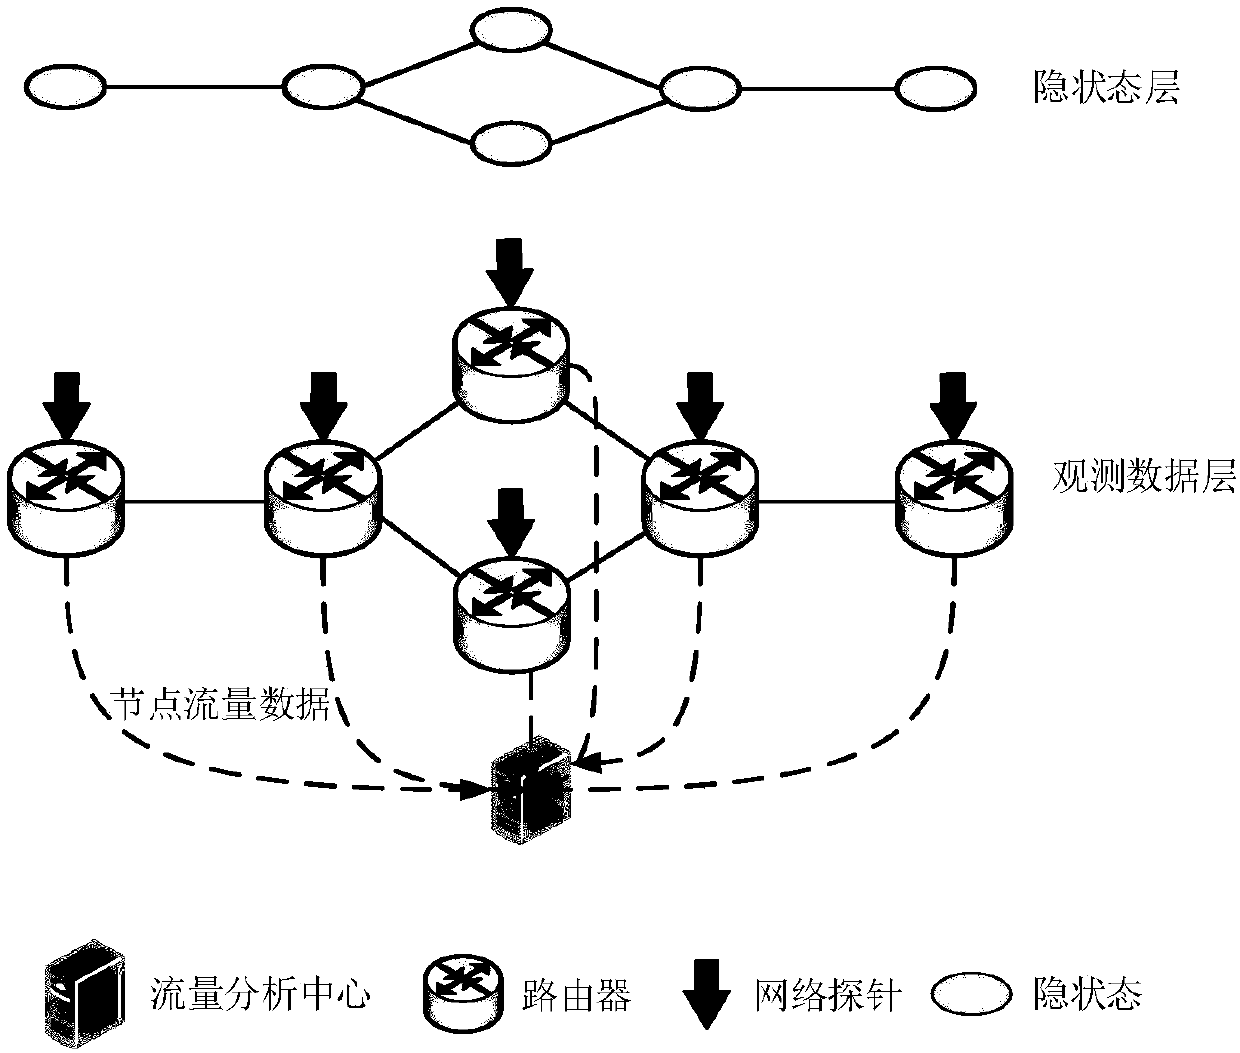 Traffic behavior analysis method oriented to distributed network